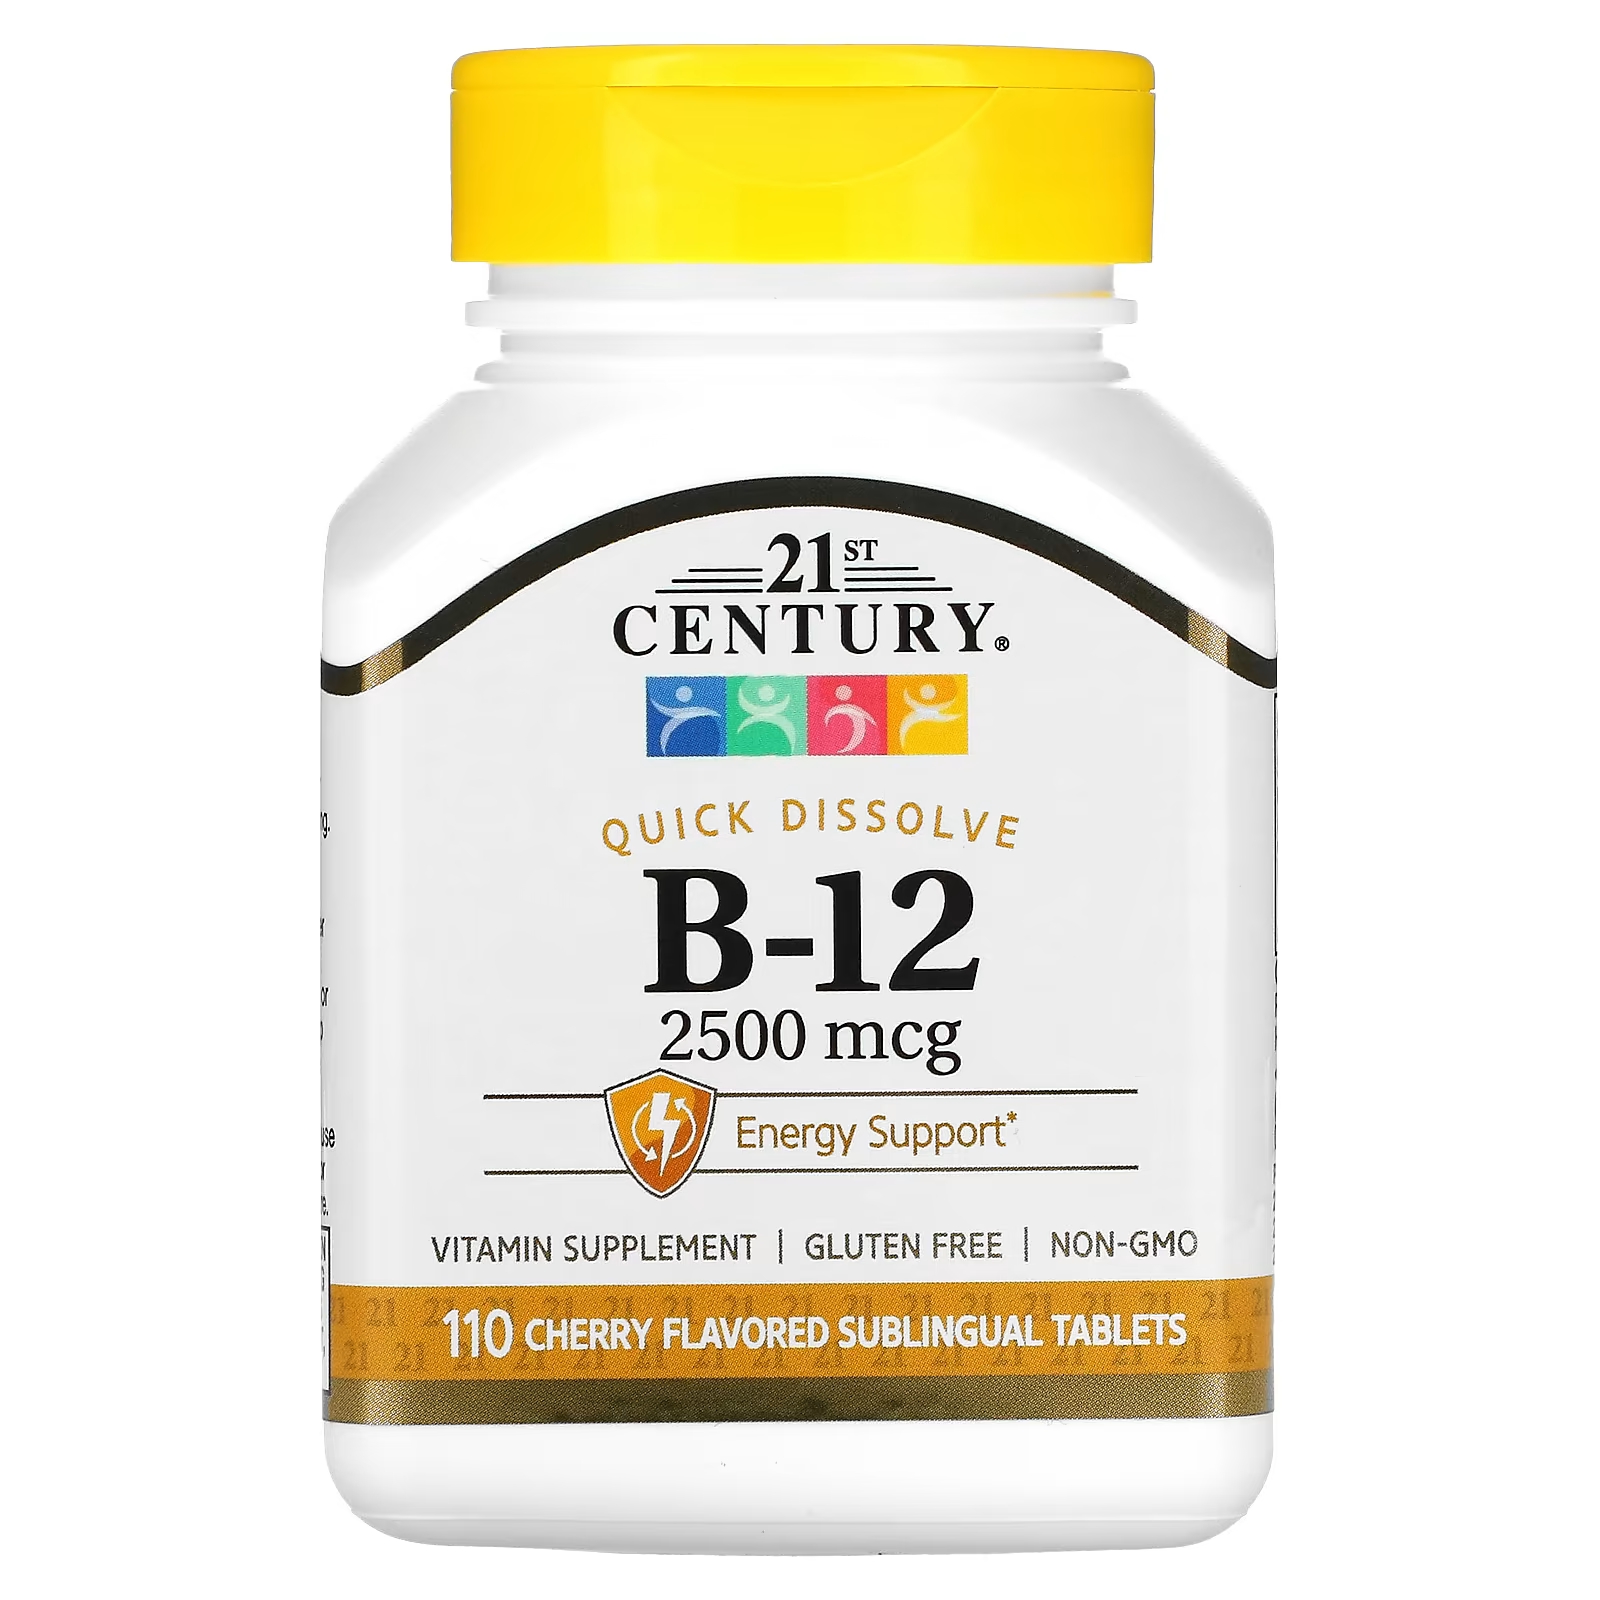 Витаминная добавка 21st Century B-12 Cherry 2500 мкг, 110 сублингвальных таблеток